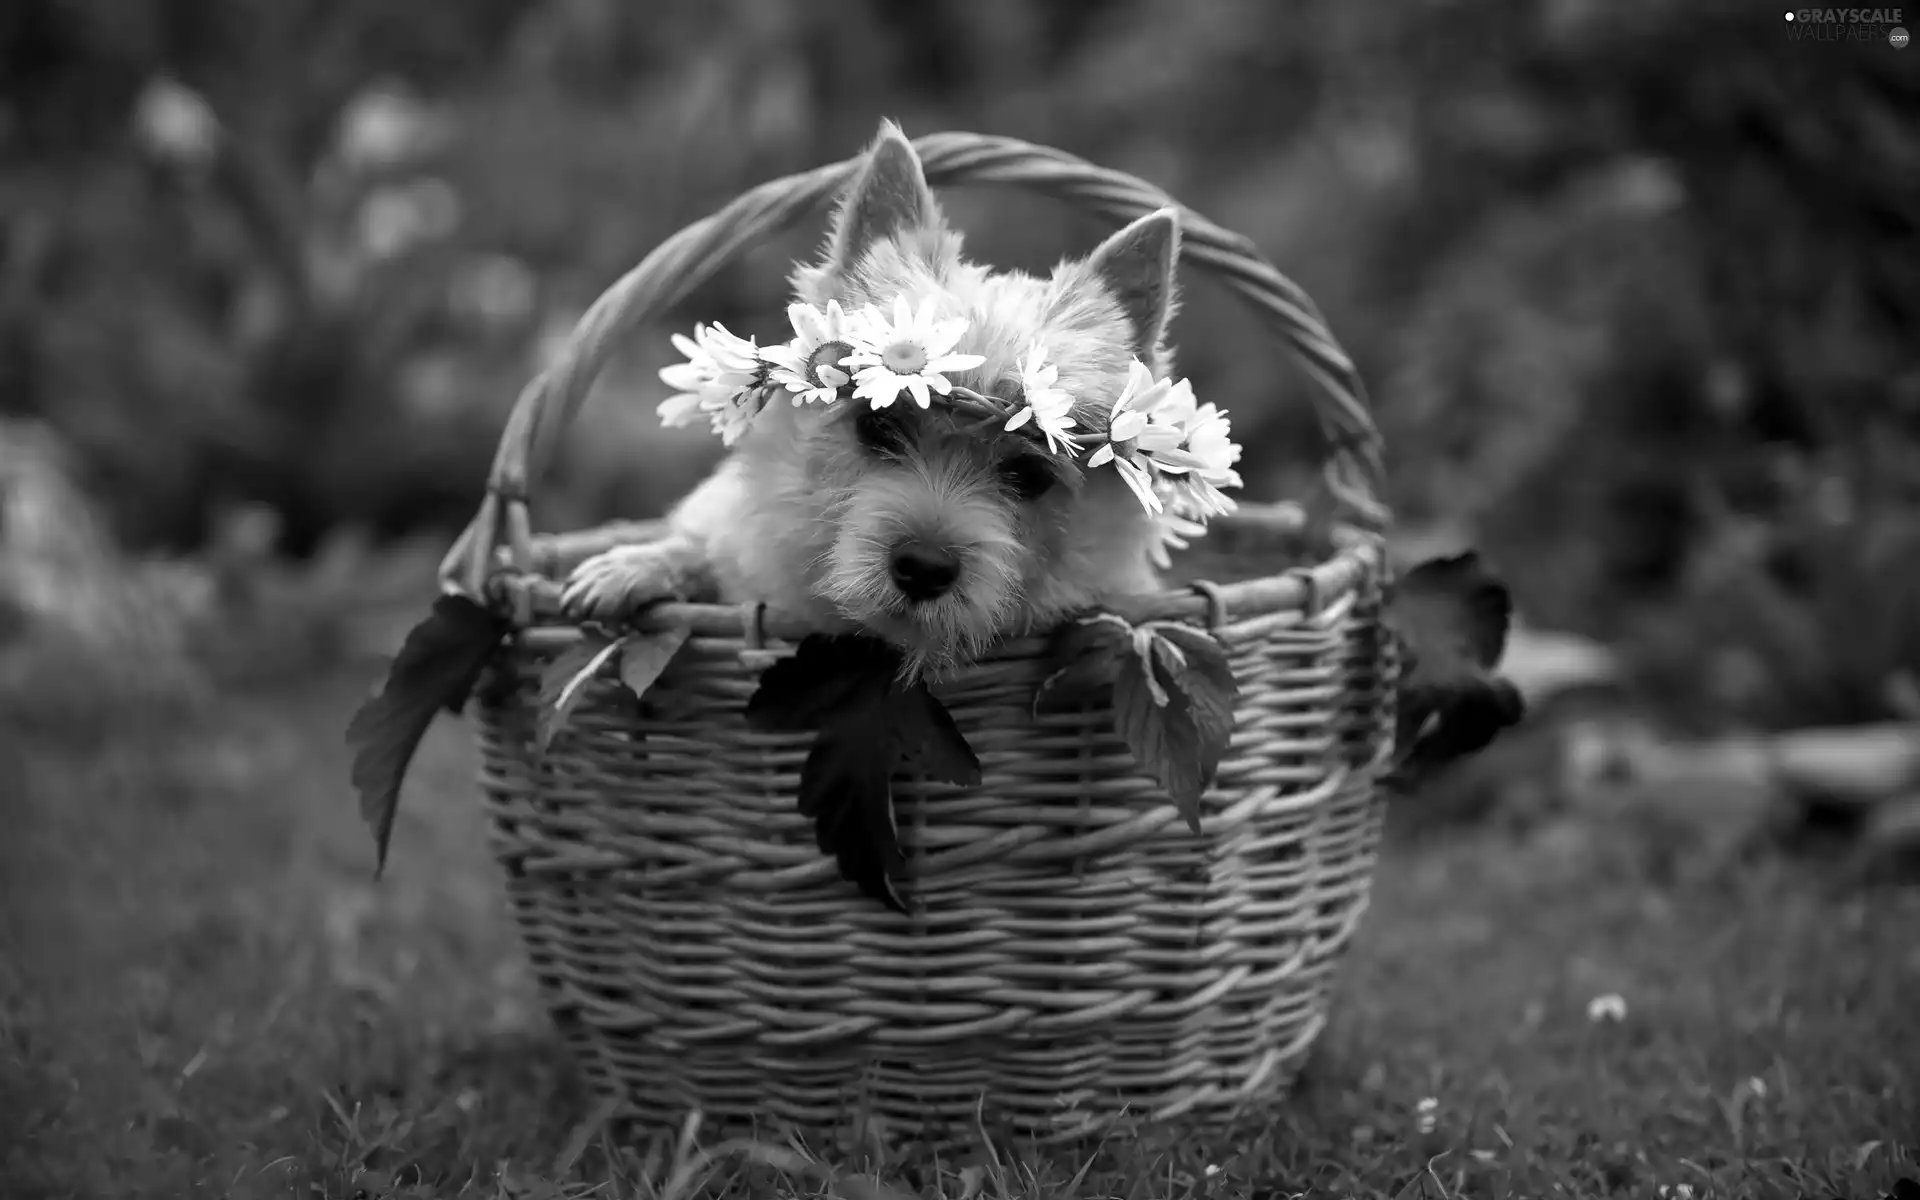 wreath, dog, basket